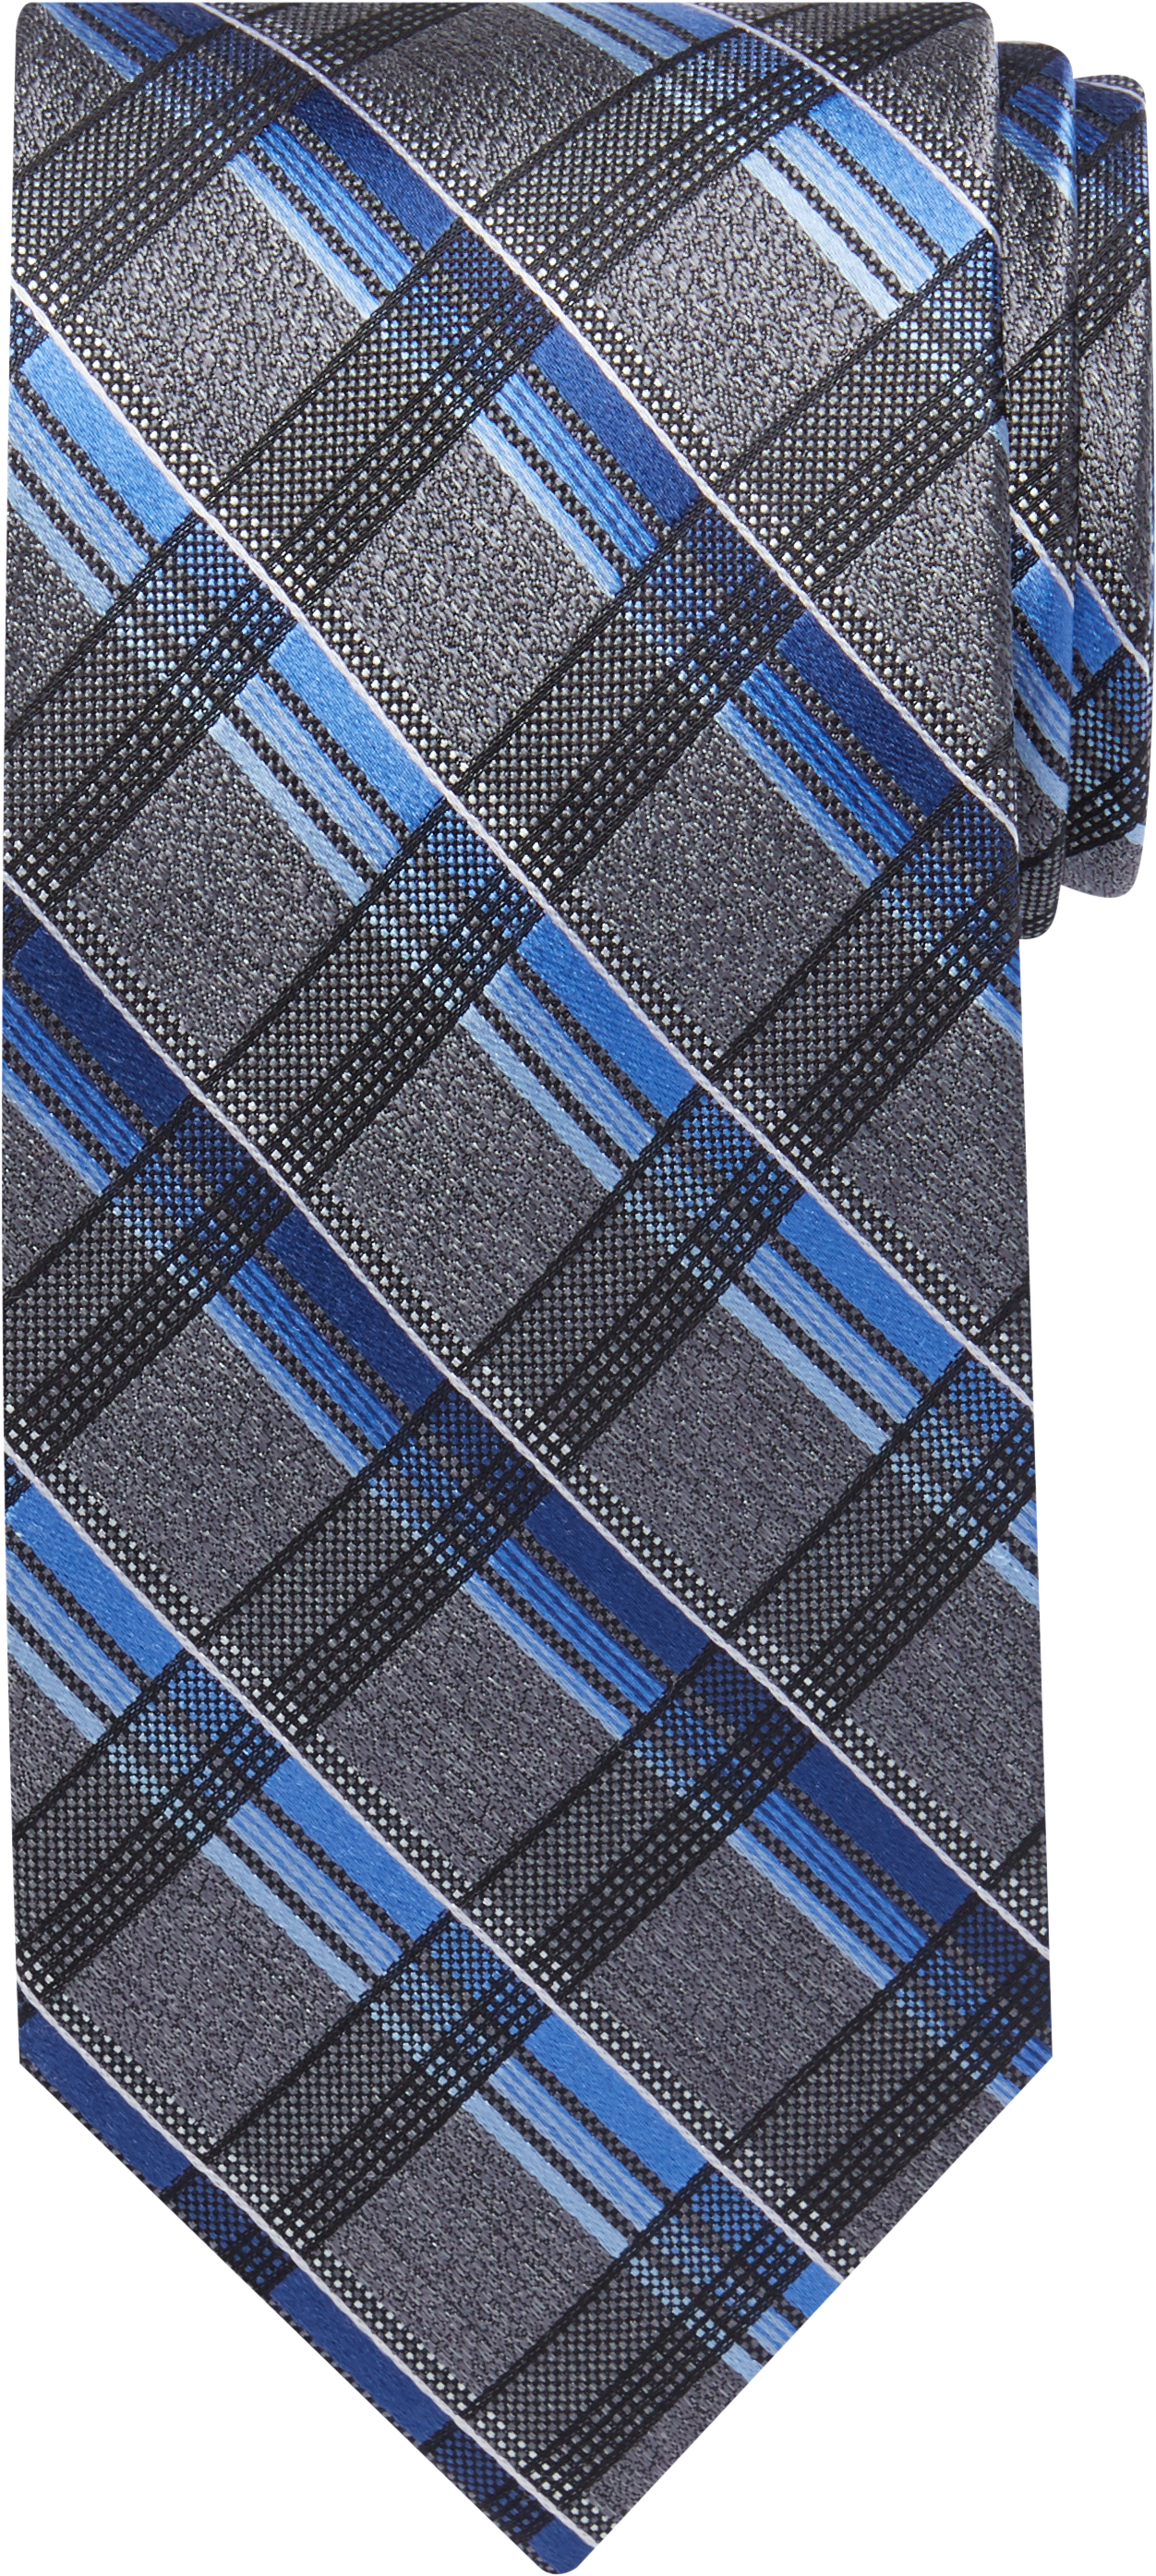 Pronto Uomo Platinum Narrow Tie, Blue & Charcoal Grid - Men's Featured ...